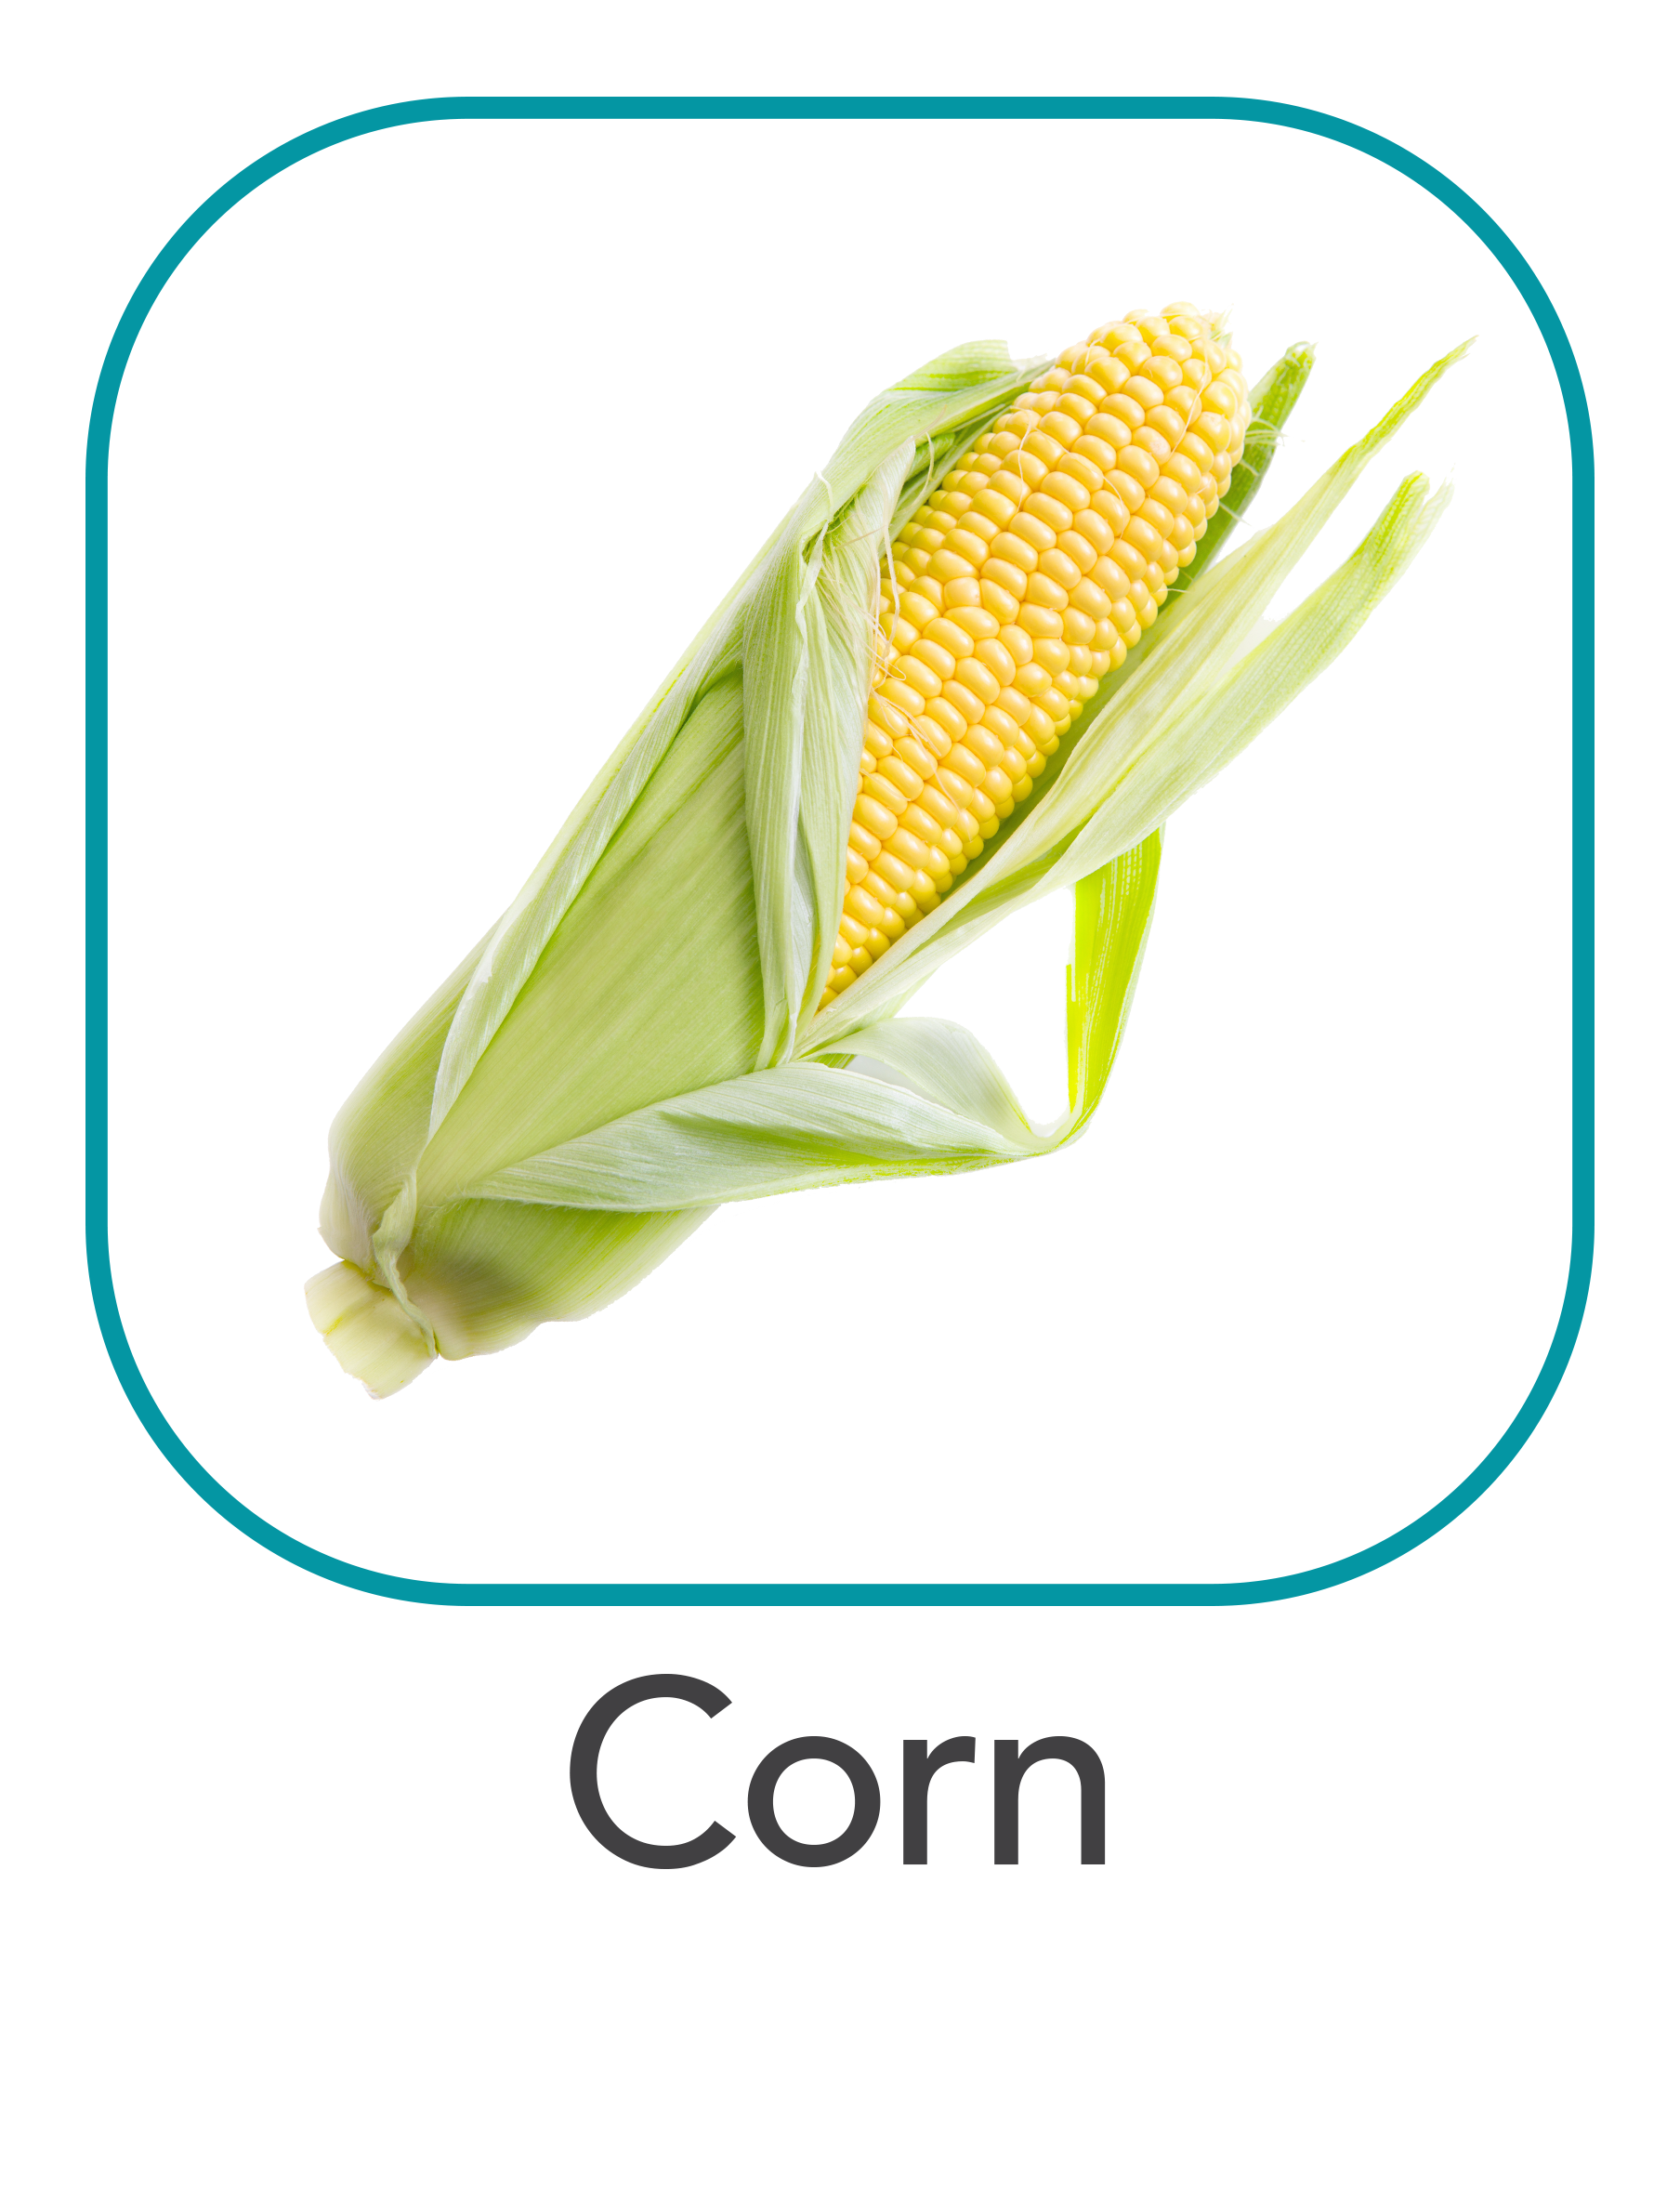 corn_web.png